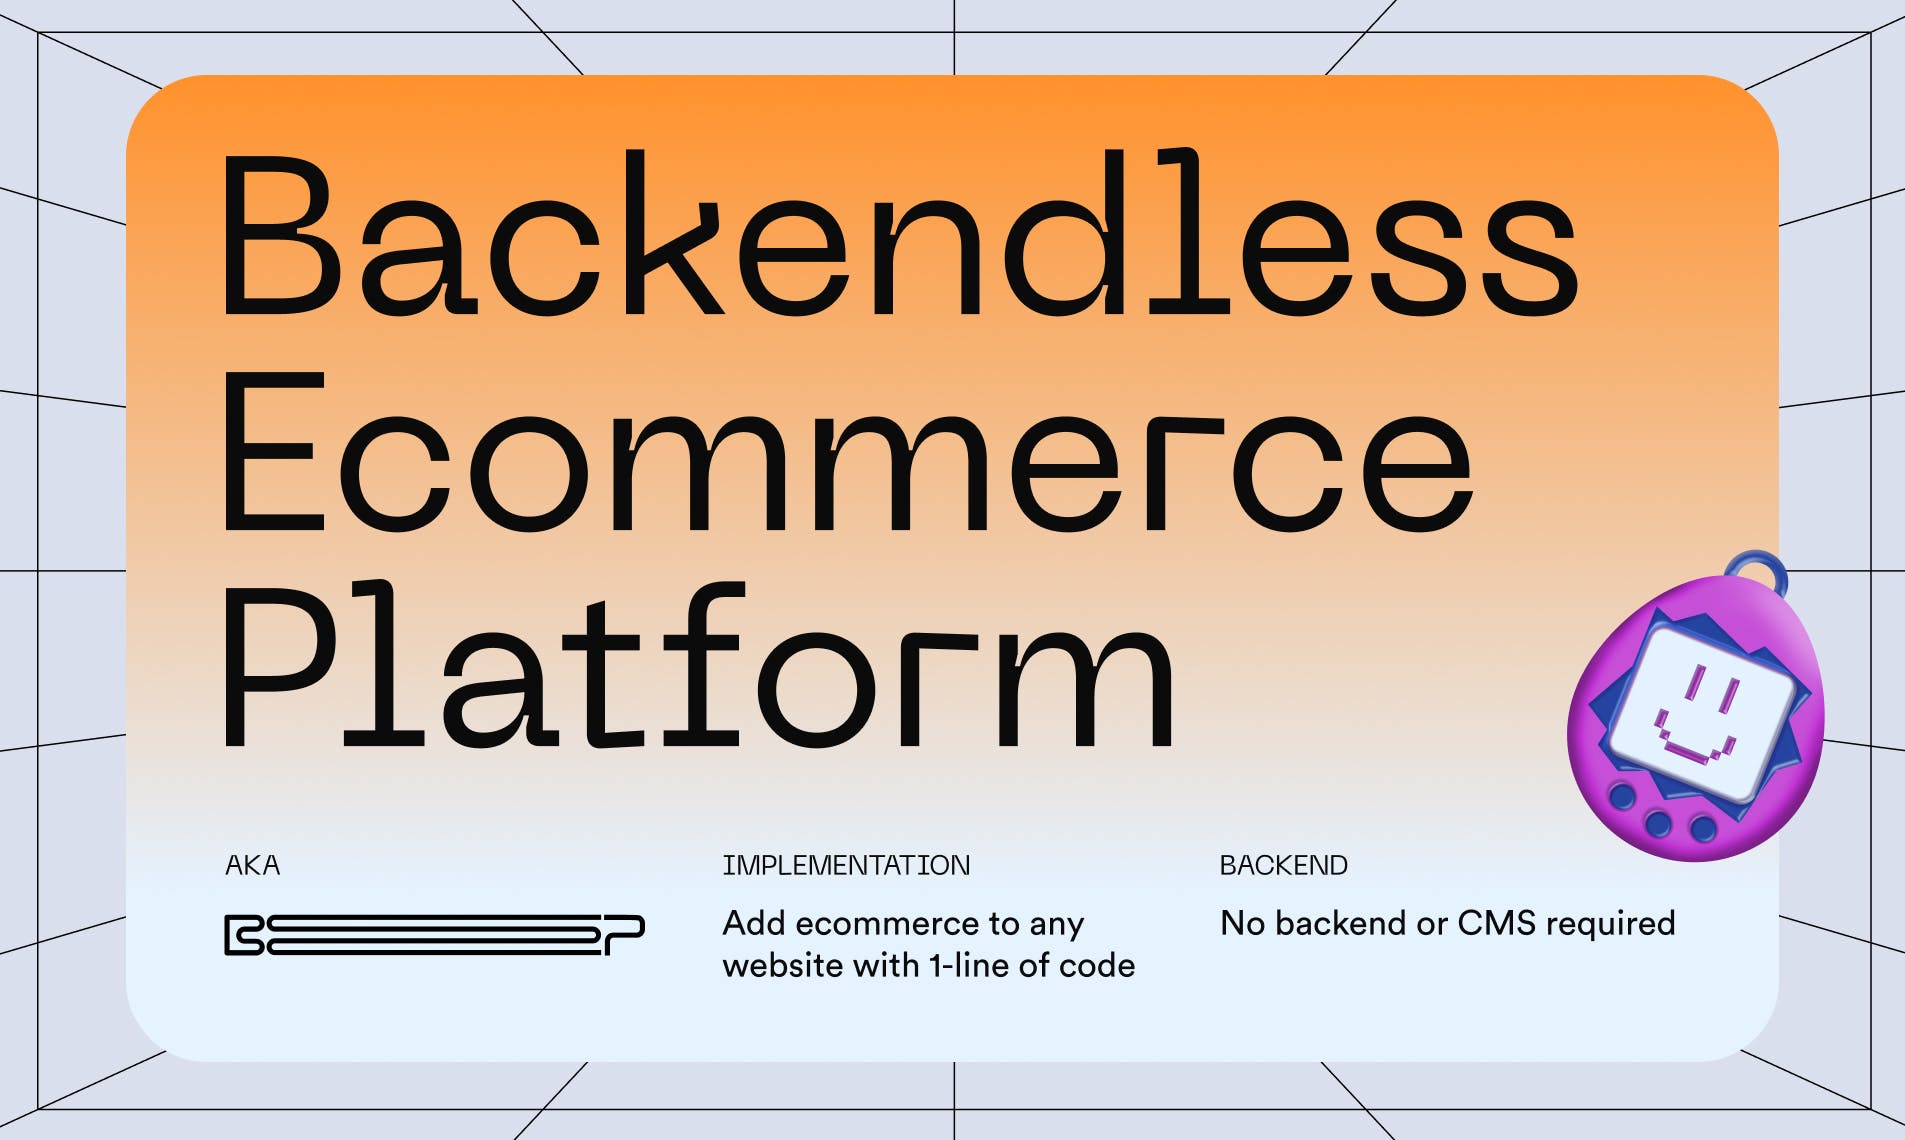 Backendless Ecommerce Platform media 1